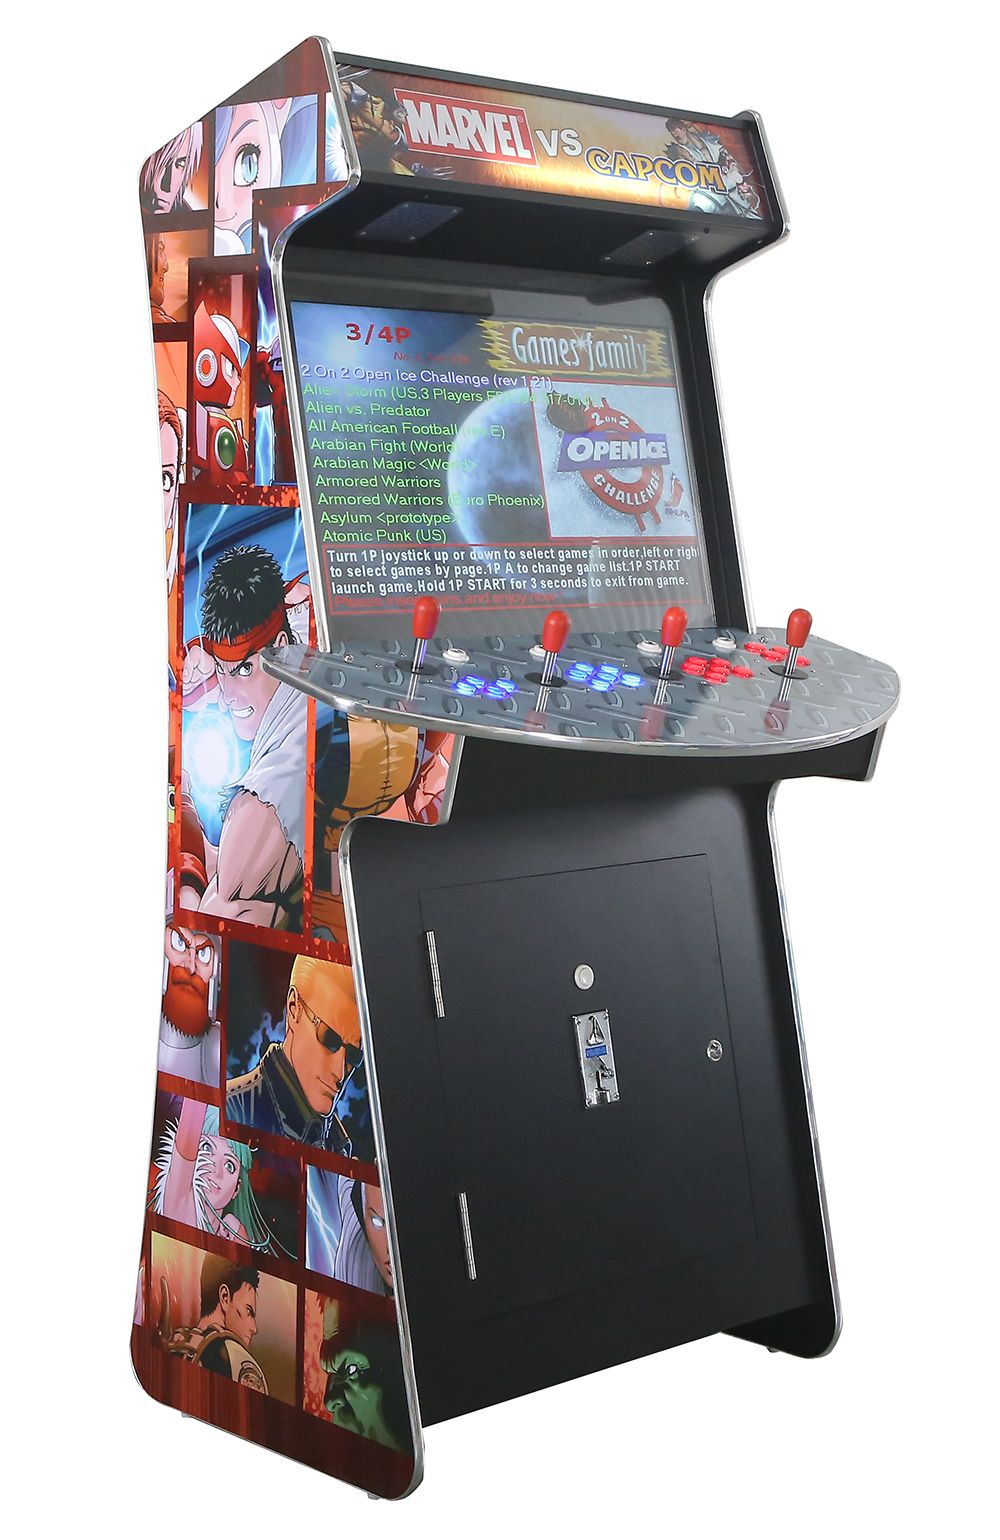 Arcade Rewind 4700 Game Slim Upright